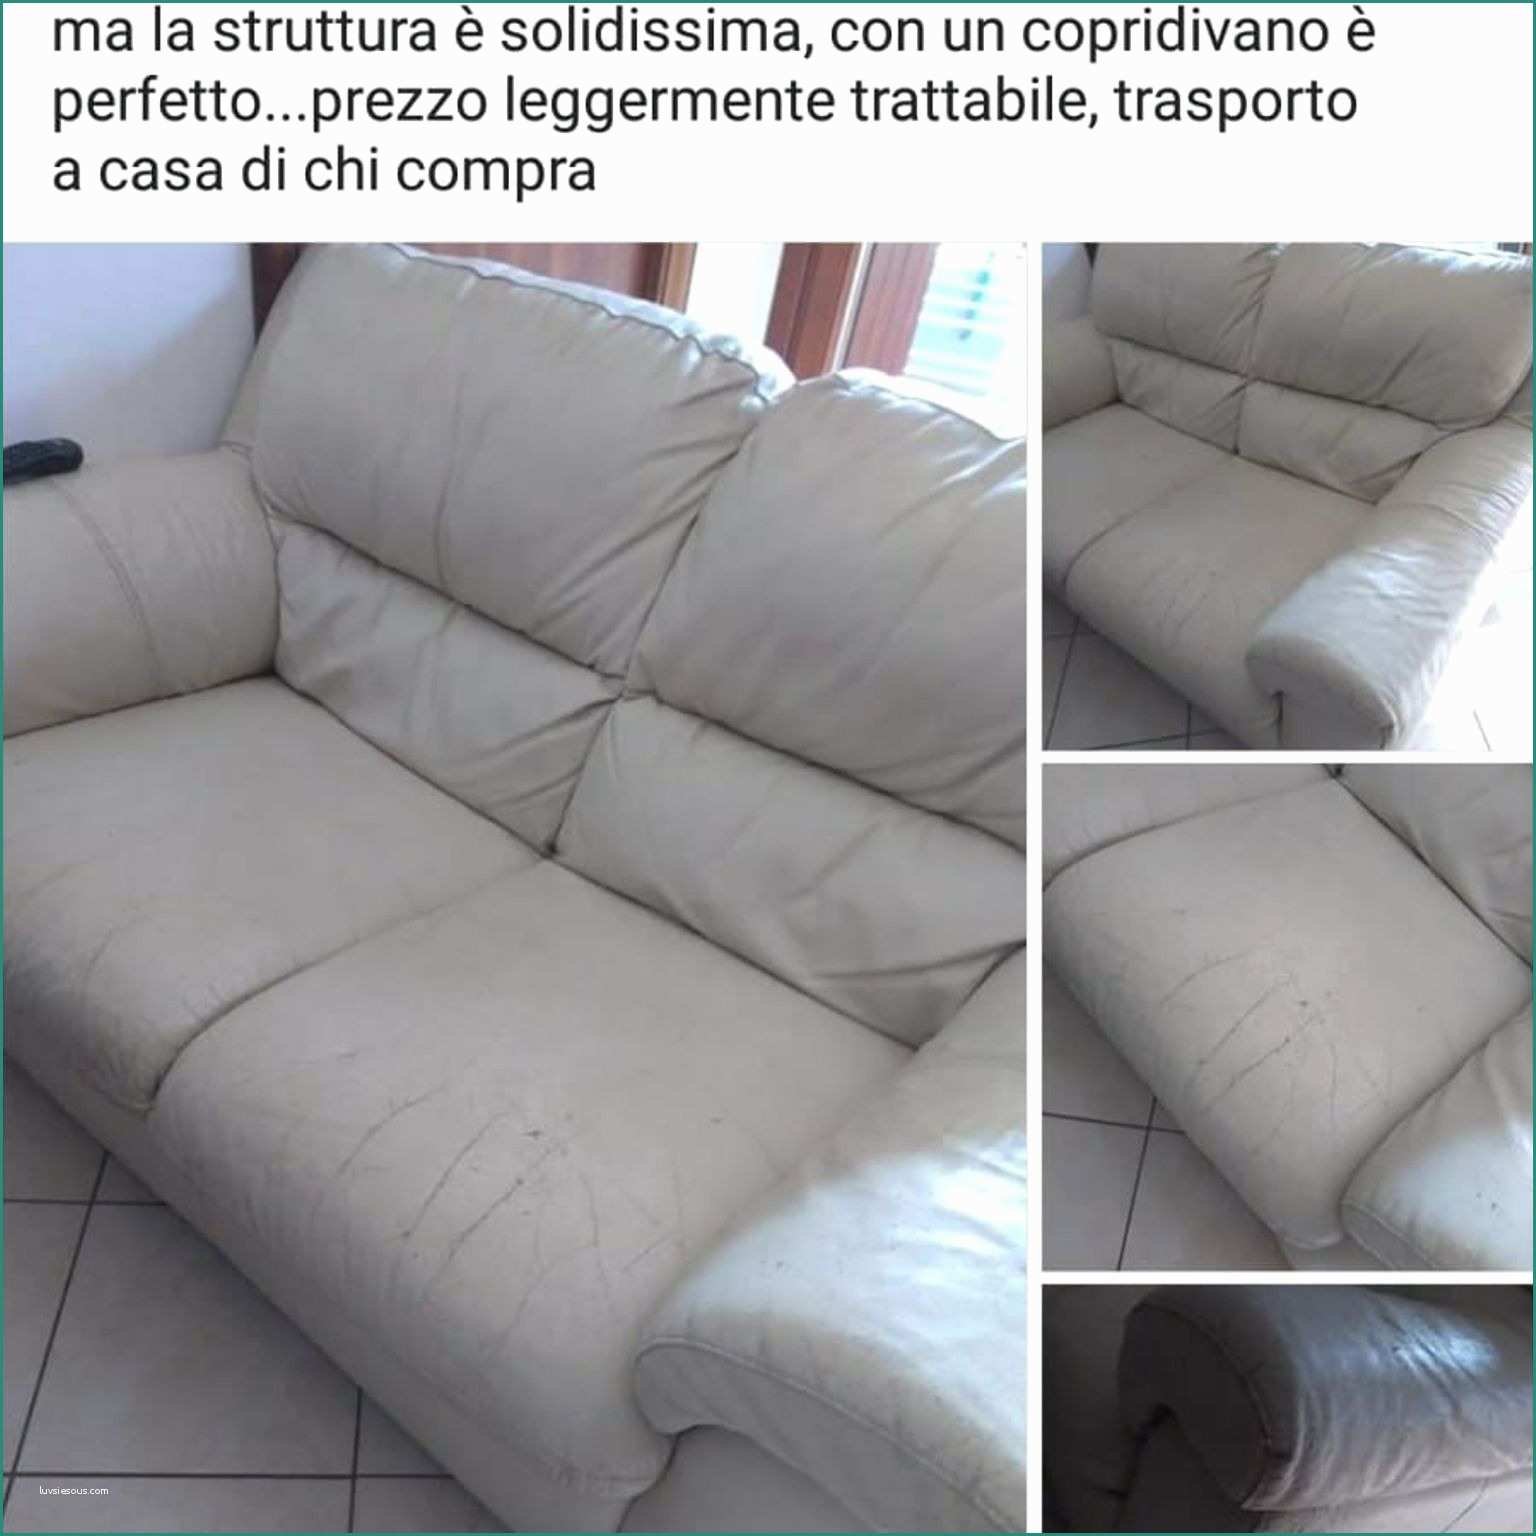 Poltrone E sofa Latina E 2018 10 09t13 29 58